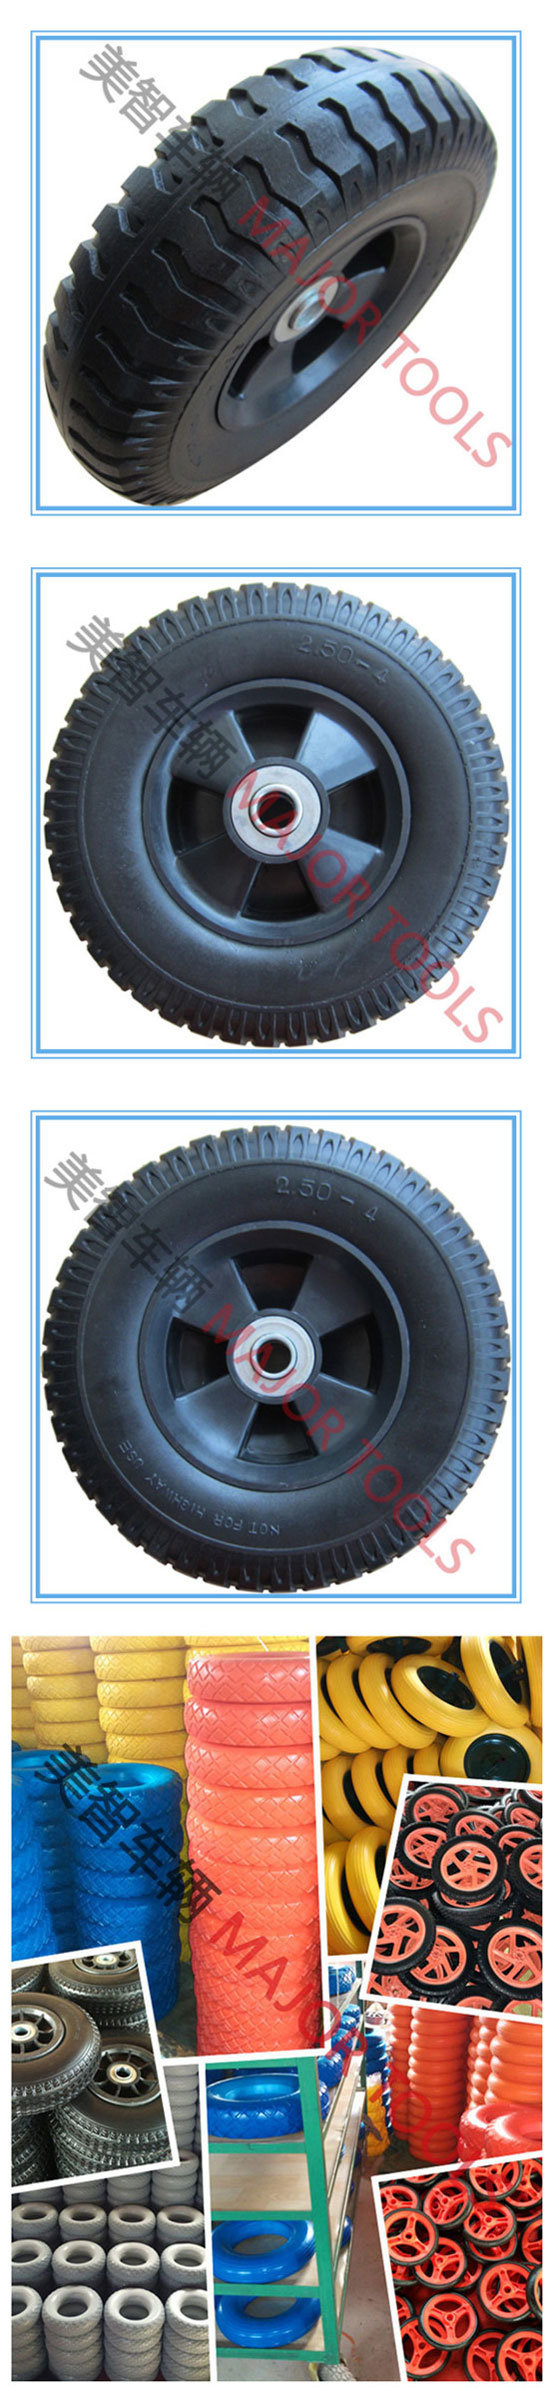 PU Foam Wheel, Flat Free Wheel, Polyurethane Wheel250-4 PU Foam Wheel